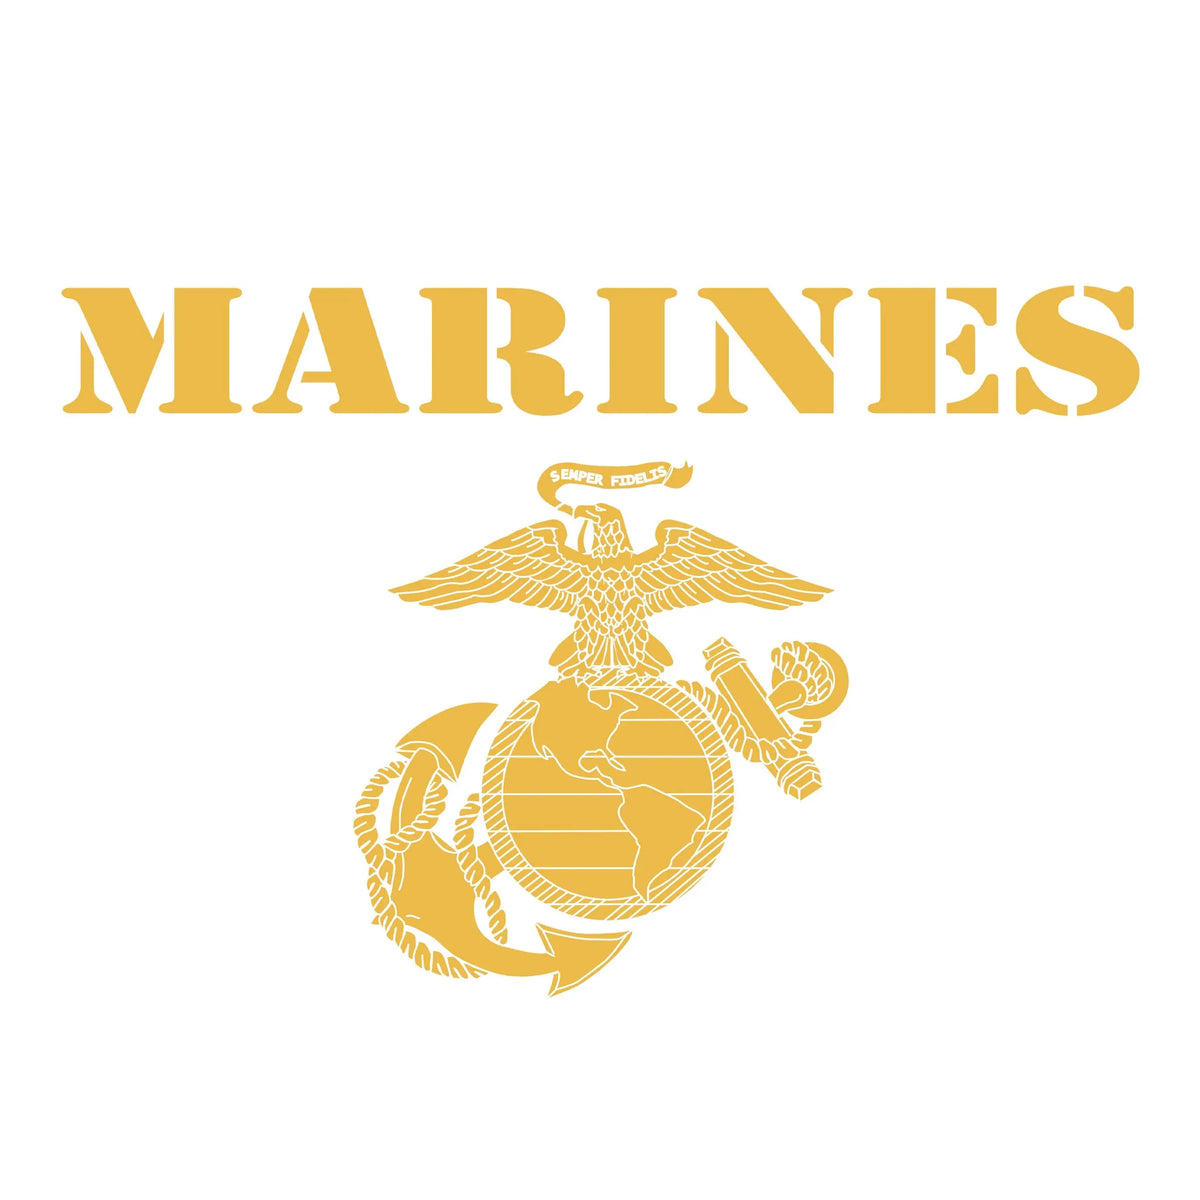 Gold Vintage Marines Performance Long Sleeve Tee